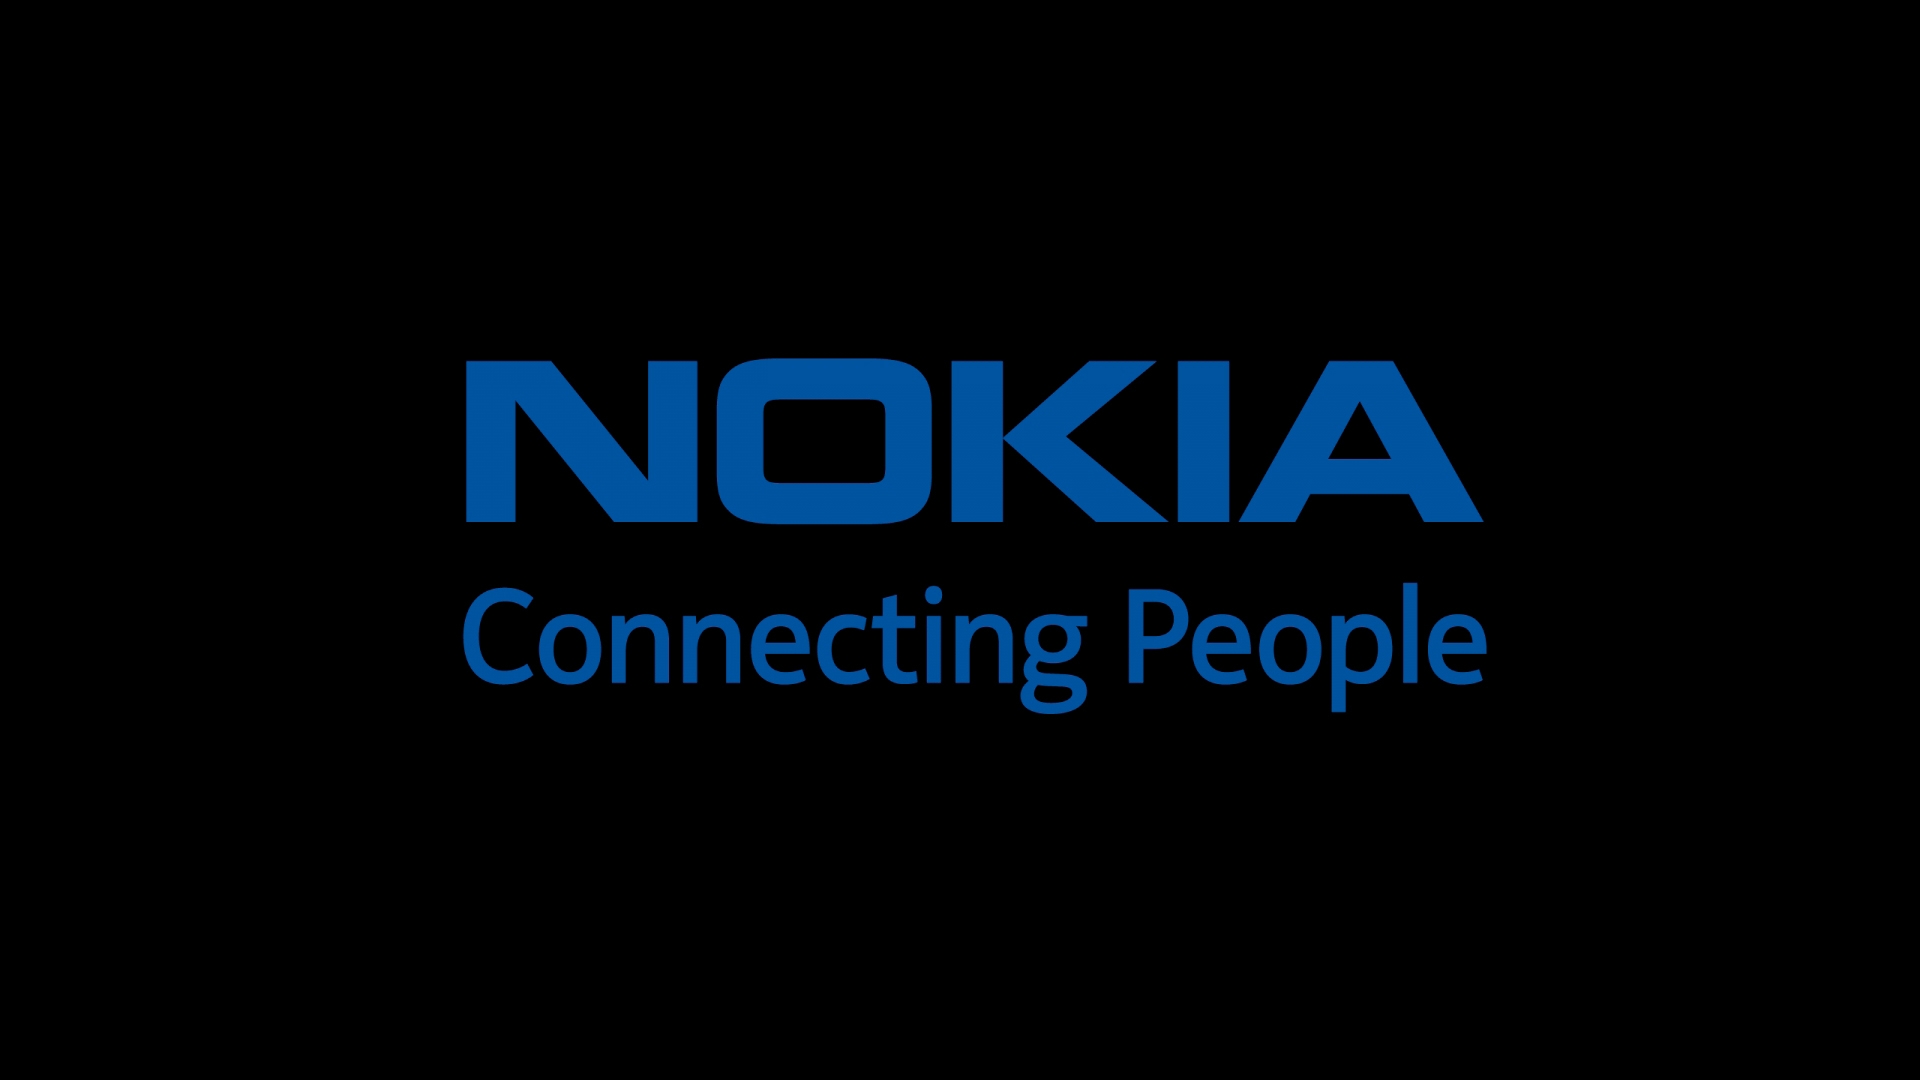 Nokia Blue Black Phones Wallpaper Background